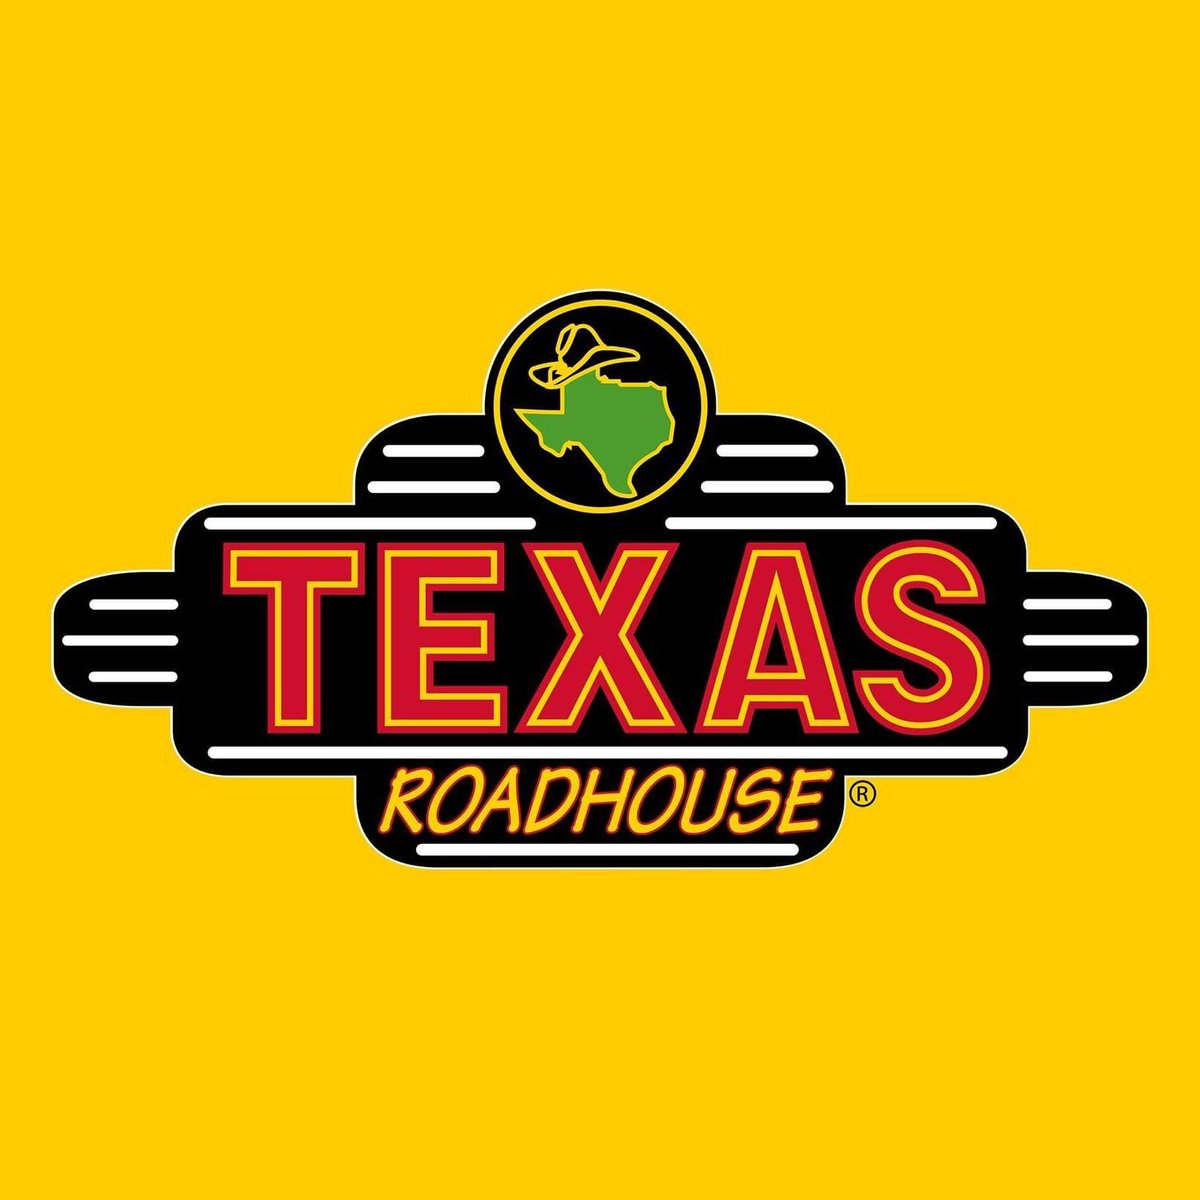 #ThankYou @texasroadhouse #Danvers for your Grandslam Sponsorship & Support! 
#TexasRoadhouse
#Community #Sponsorship #LynnfieldBaseball
#LynnfieldLittleLeague #ThankfulTuesday #Tuesday #TuesdayVibes @Wally97